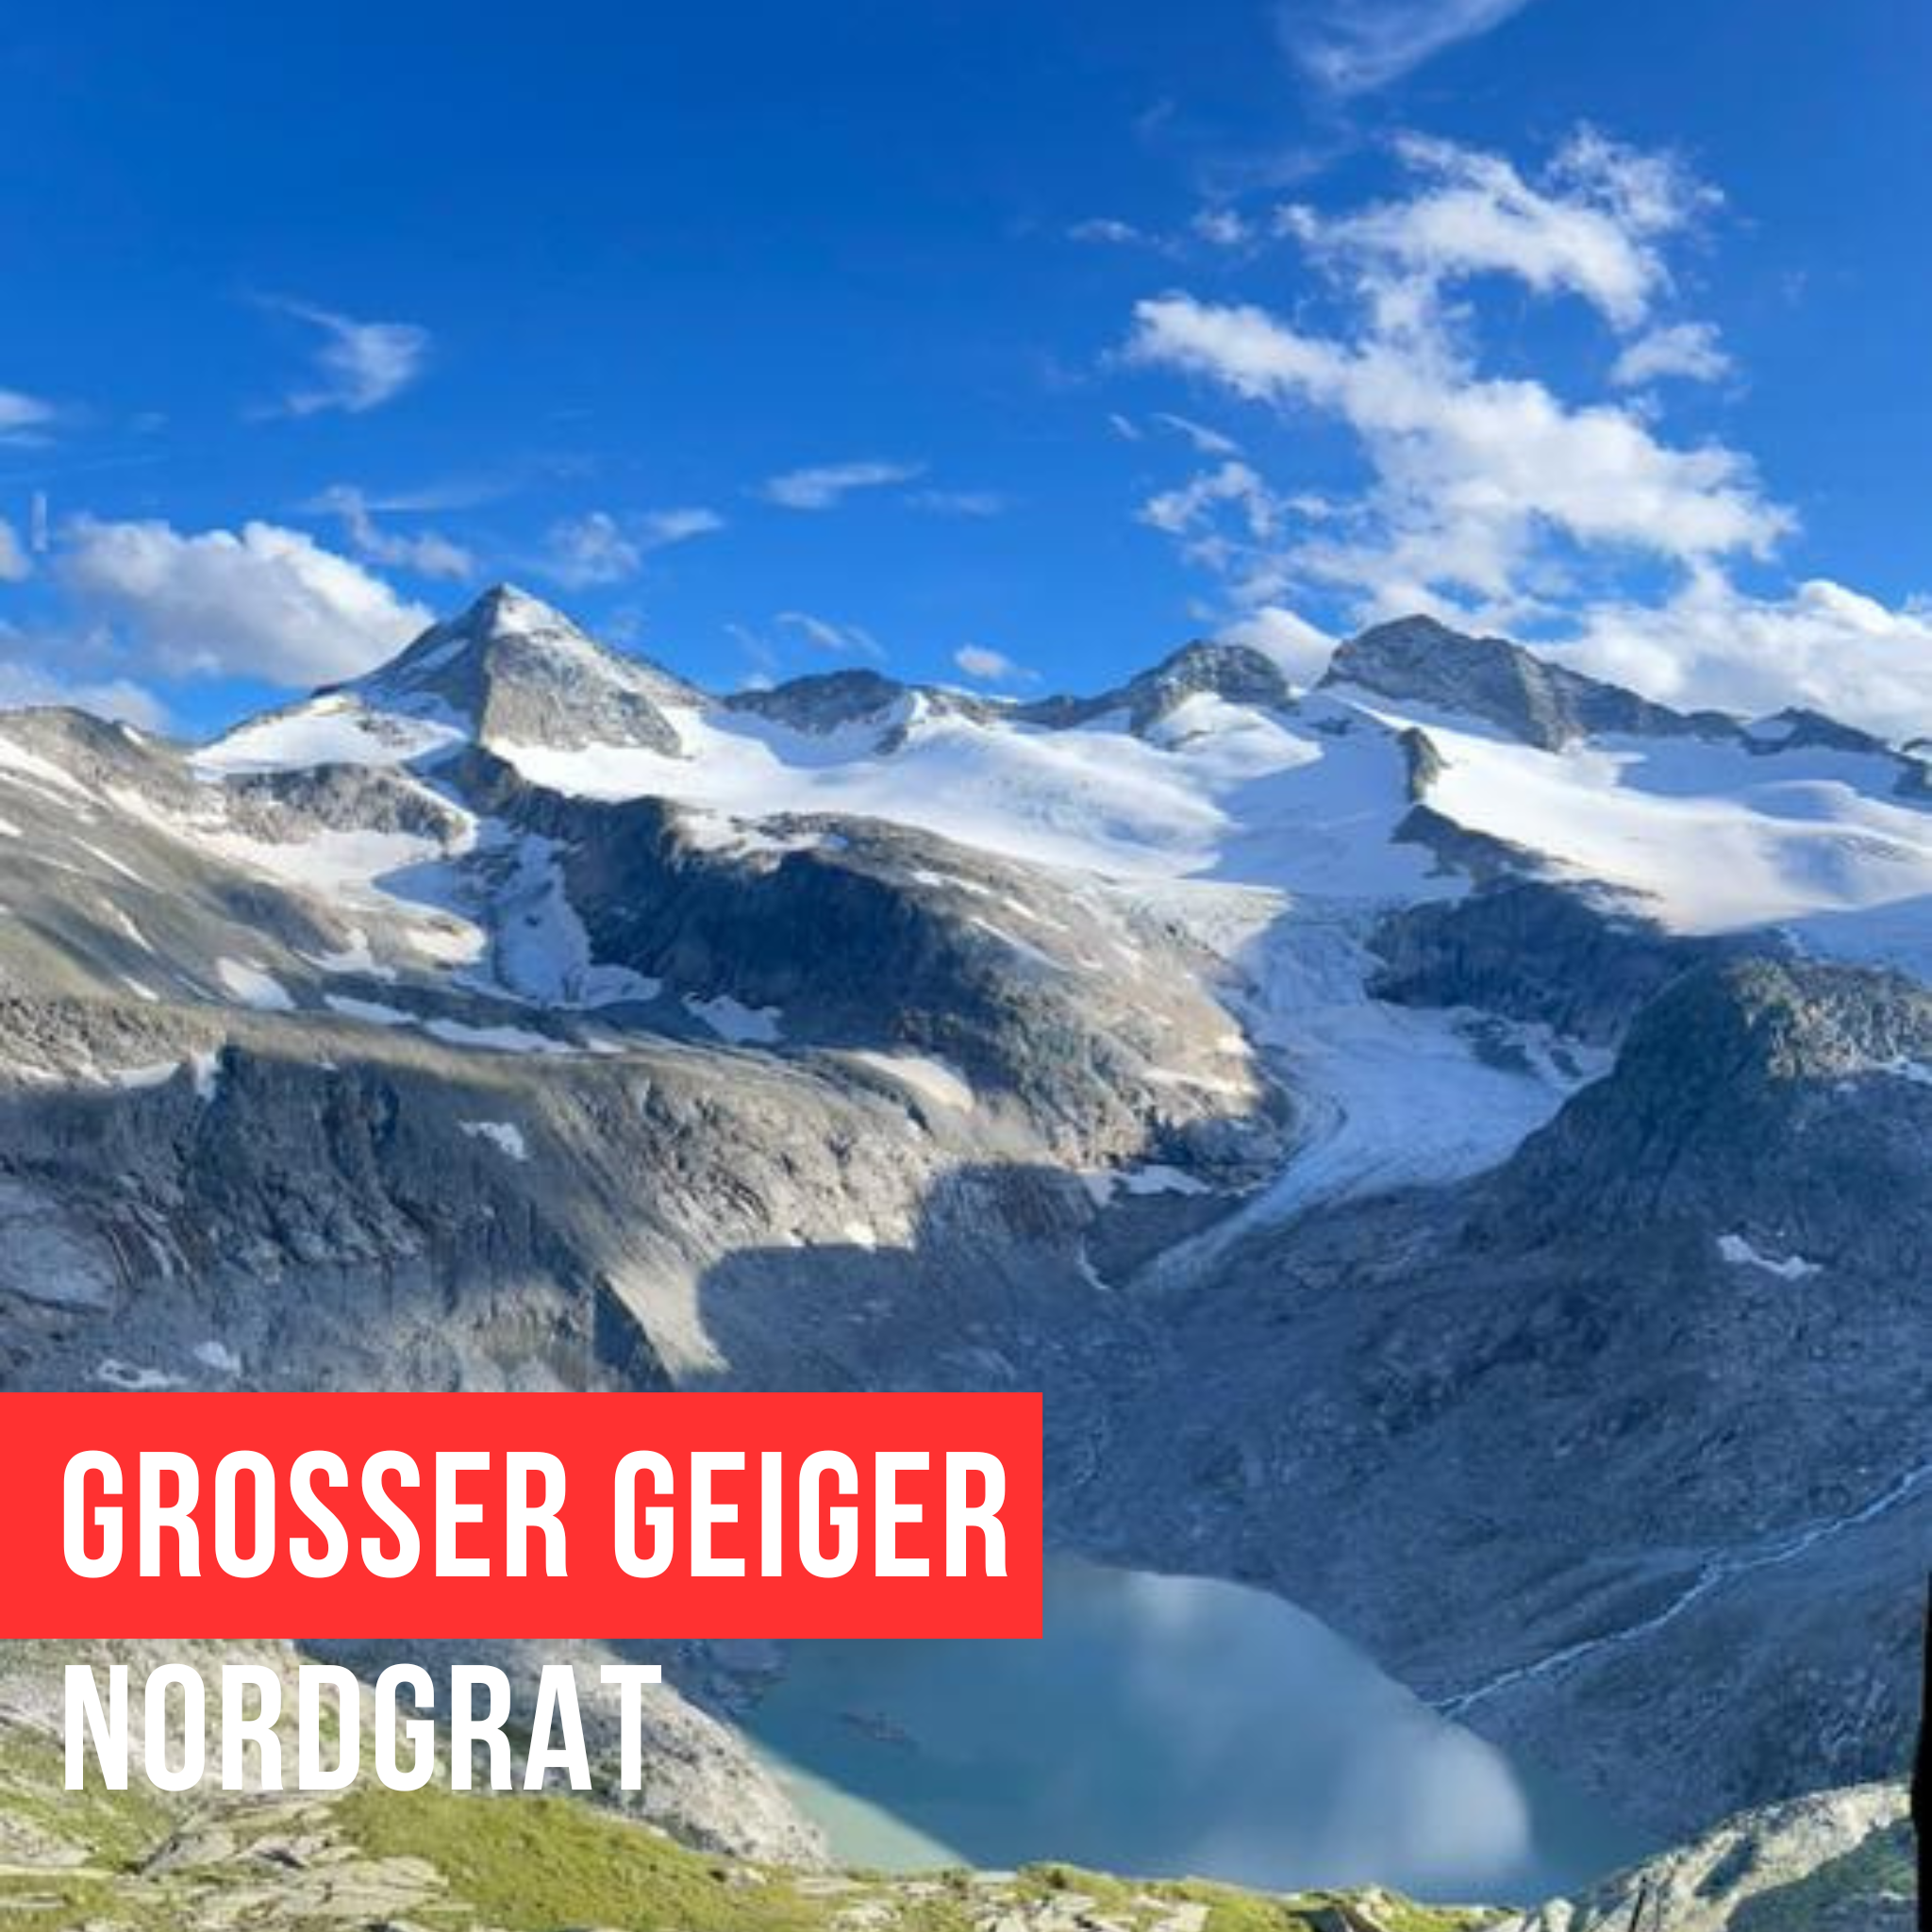 Großvenediger north ridge